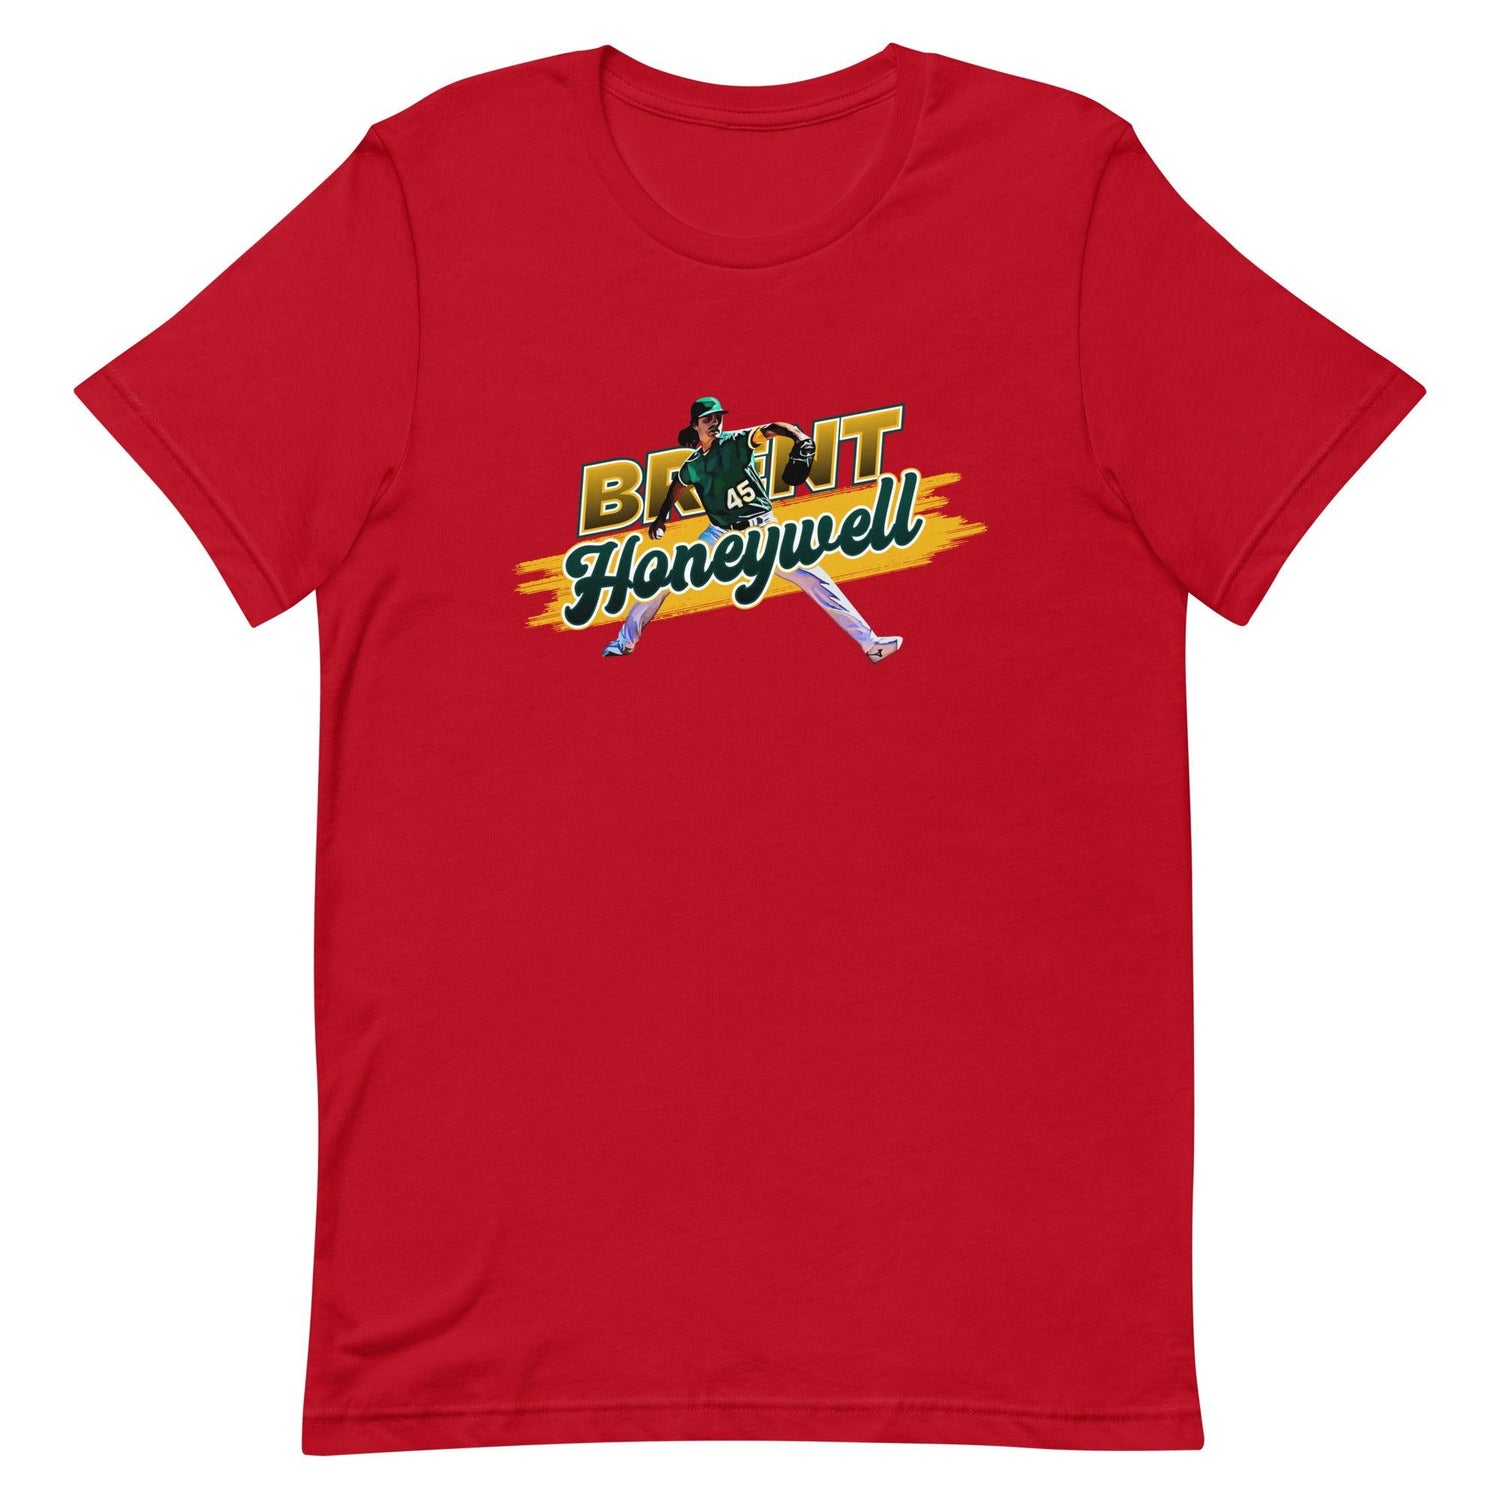 Brent Honeywell "Strike" t-shirt - Fan Arch